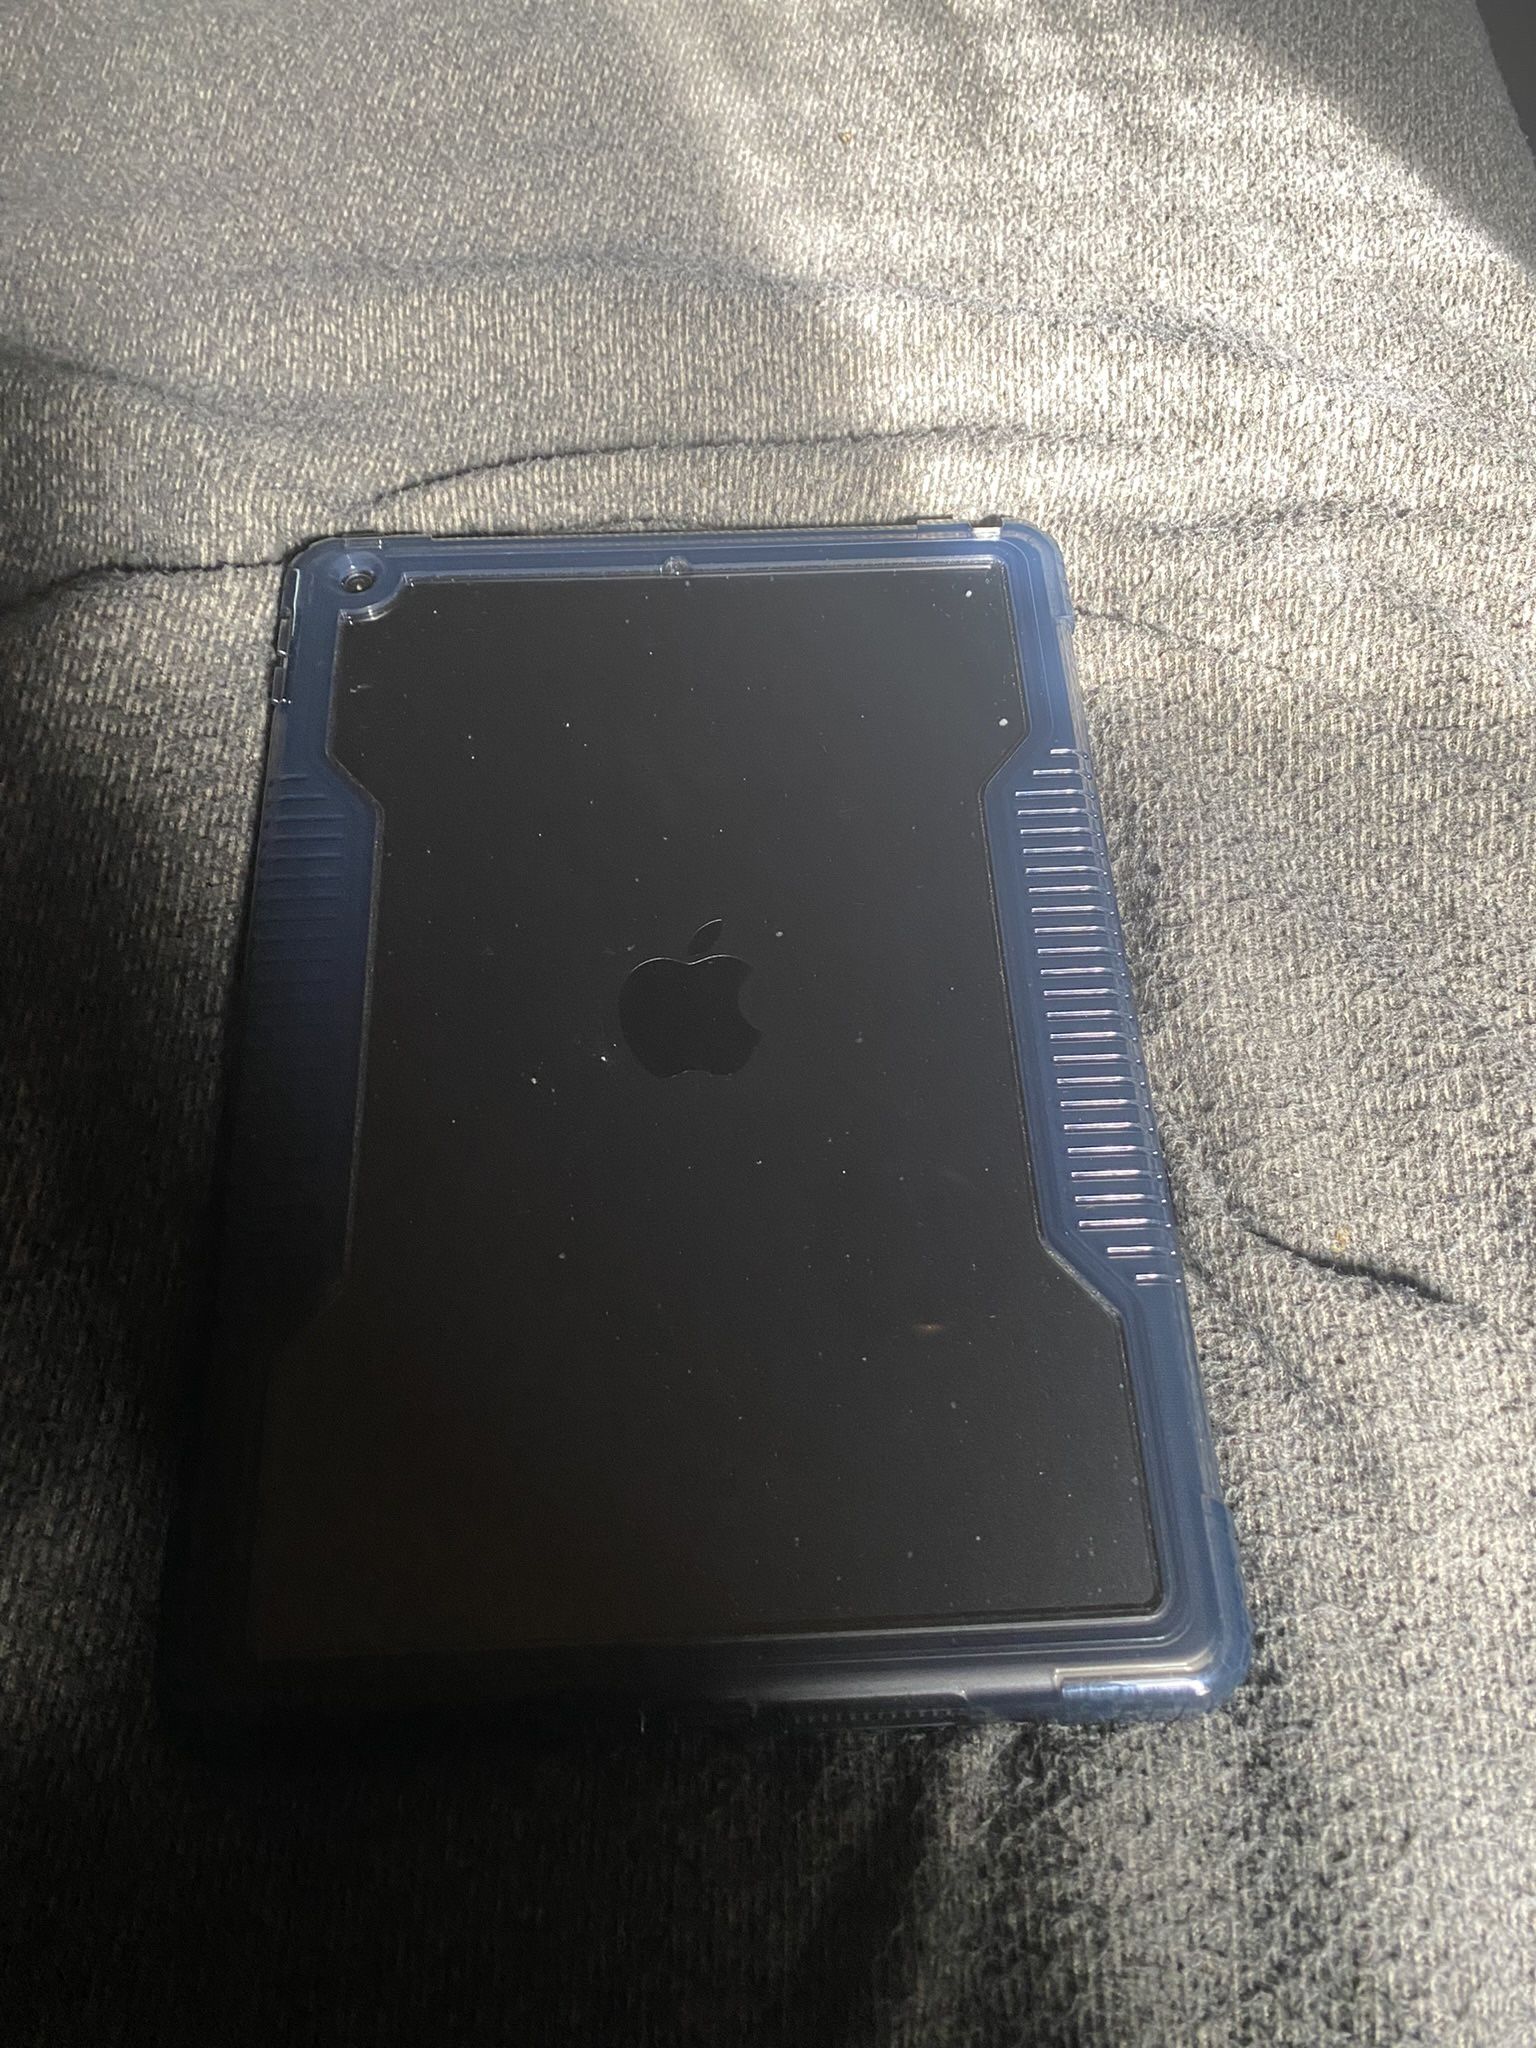 2021 Apple 10.2-inch iPad Wi-Fi 256GB - Space Gray (9th Generation)